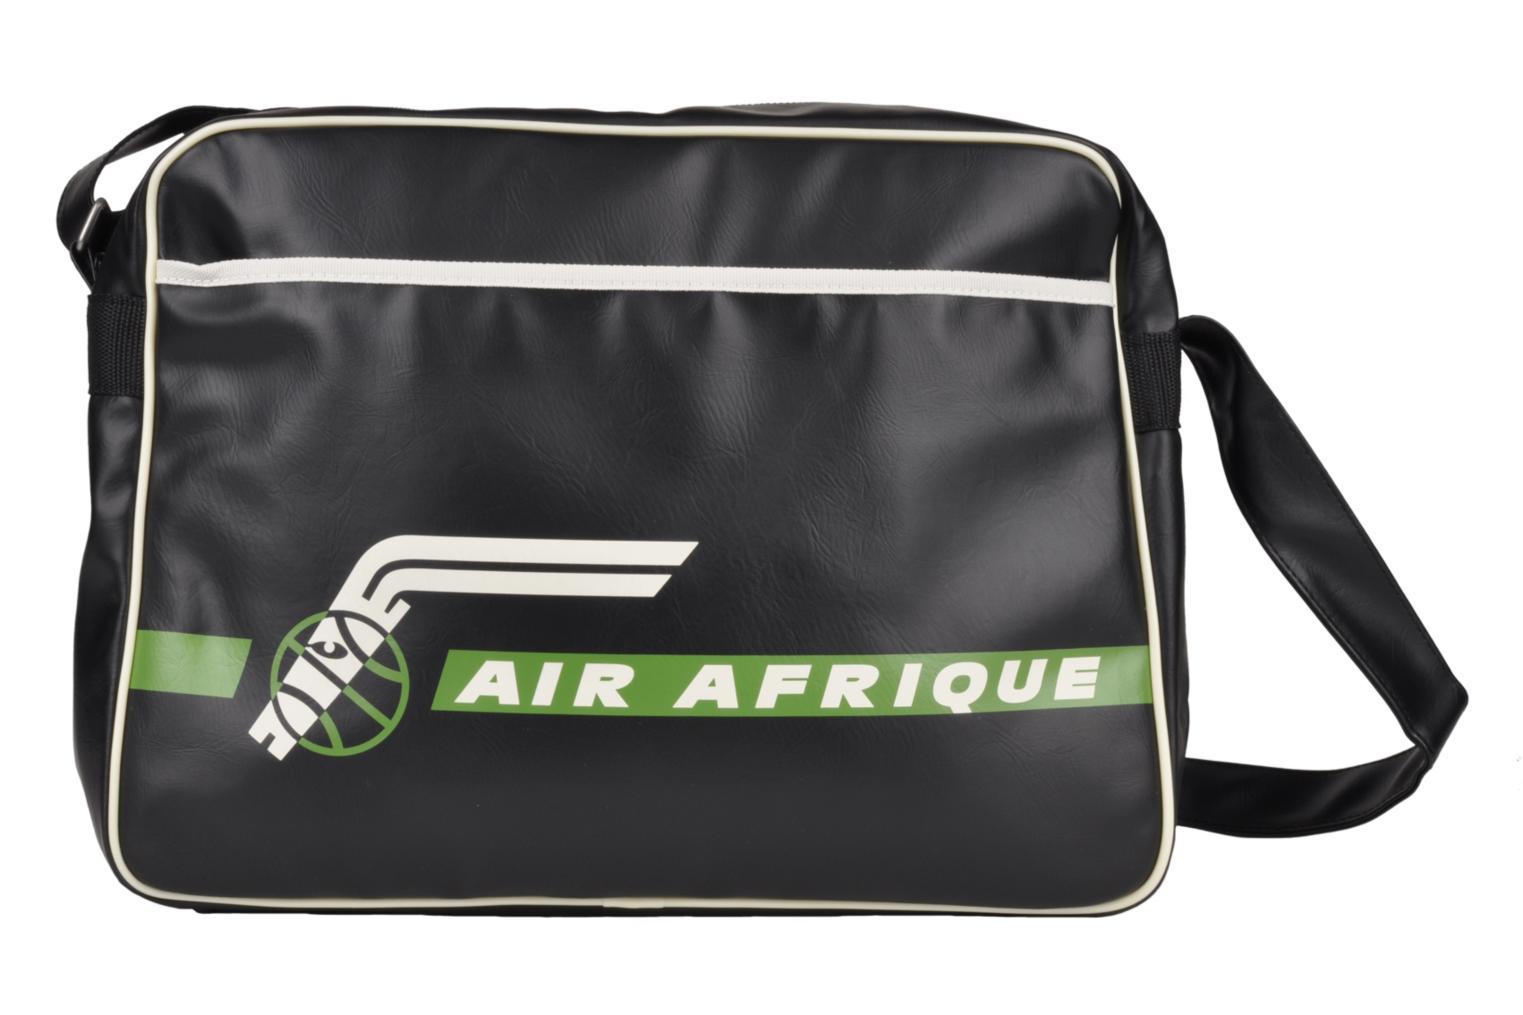 Foto City bags Logoshirt Air Afrique Bolsos y complementos foto 130696